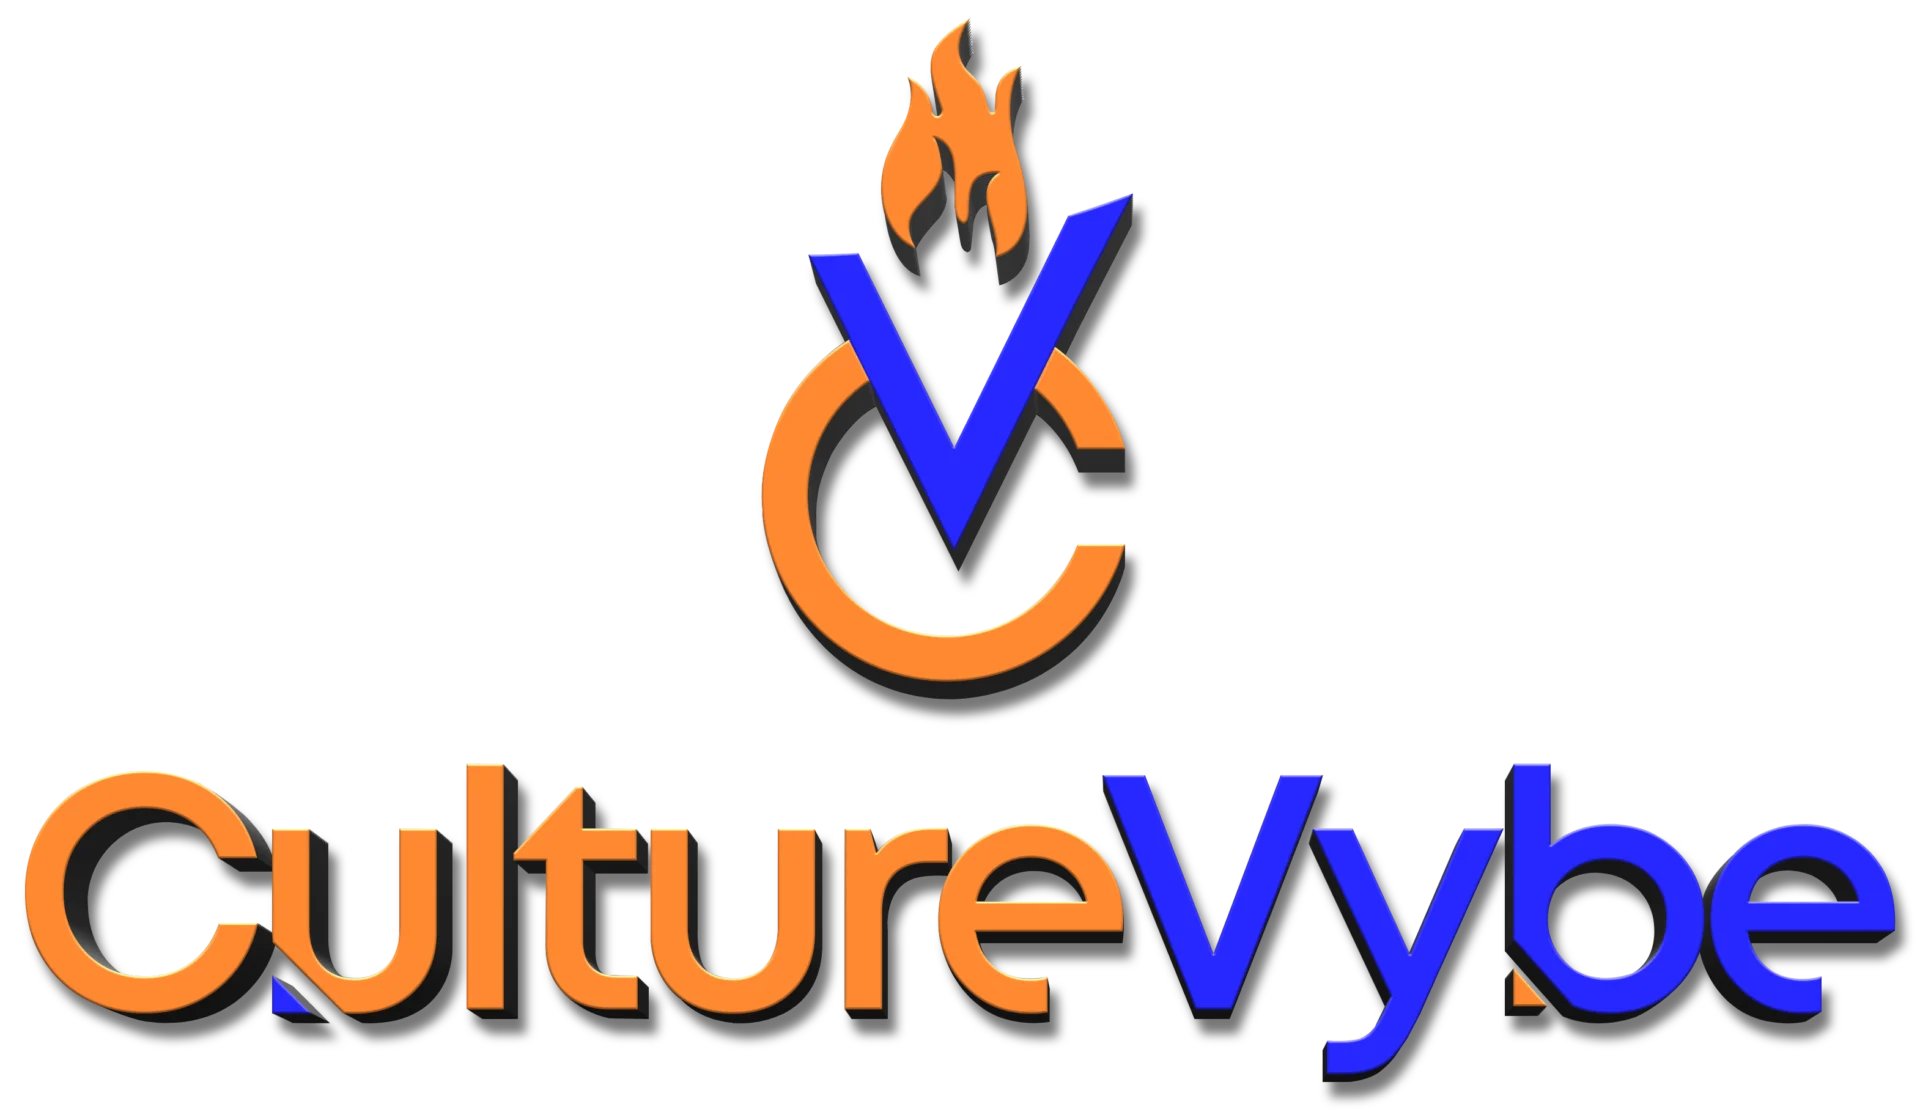 A blue and orange logo for the vulturevyy. Com site